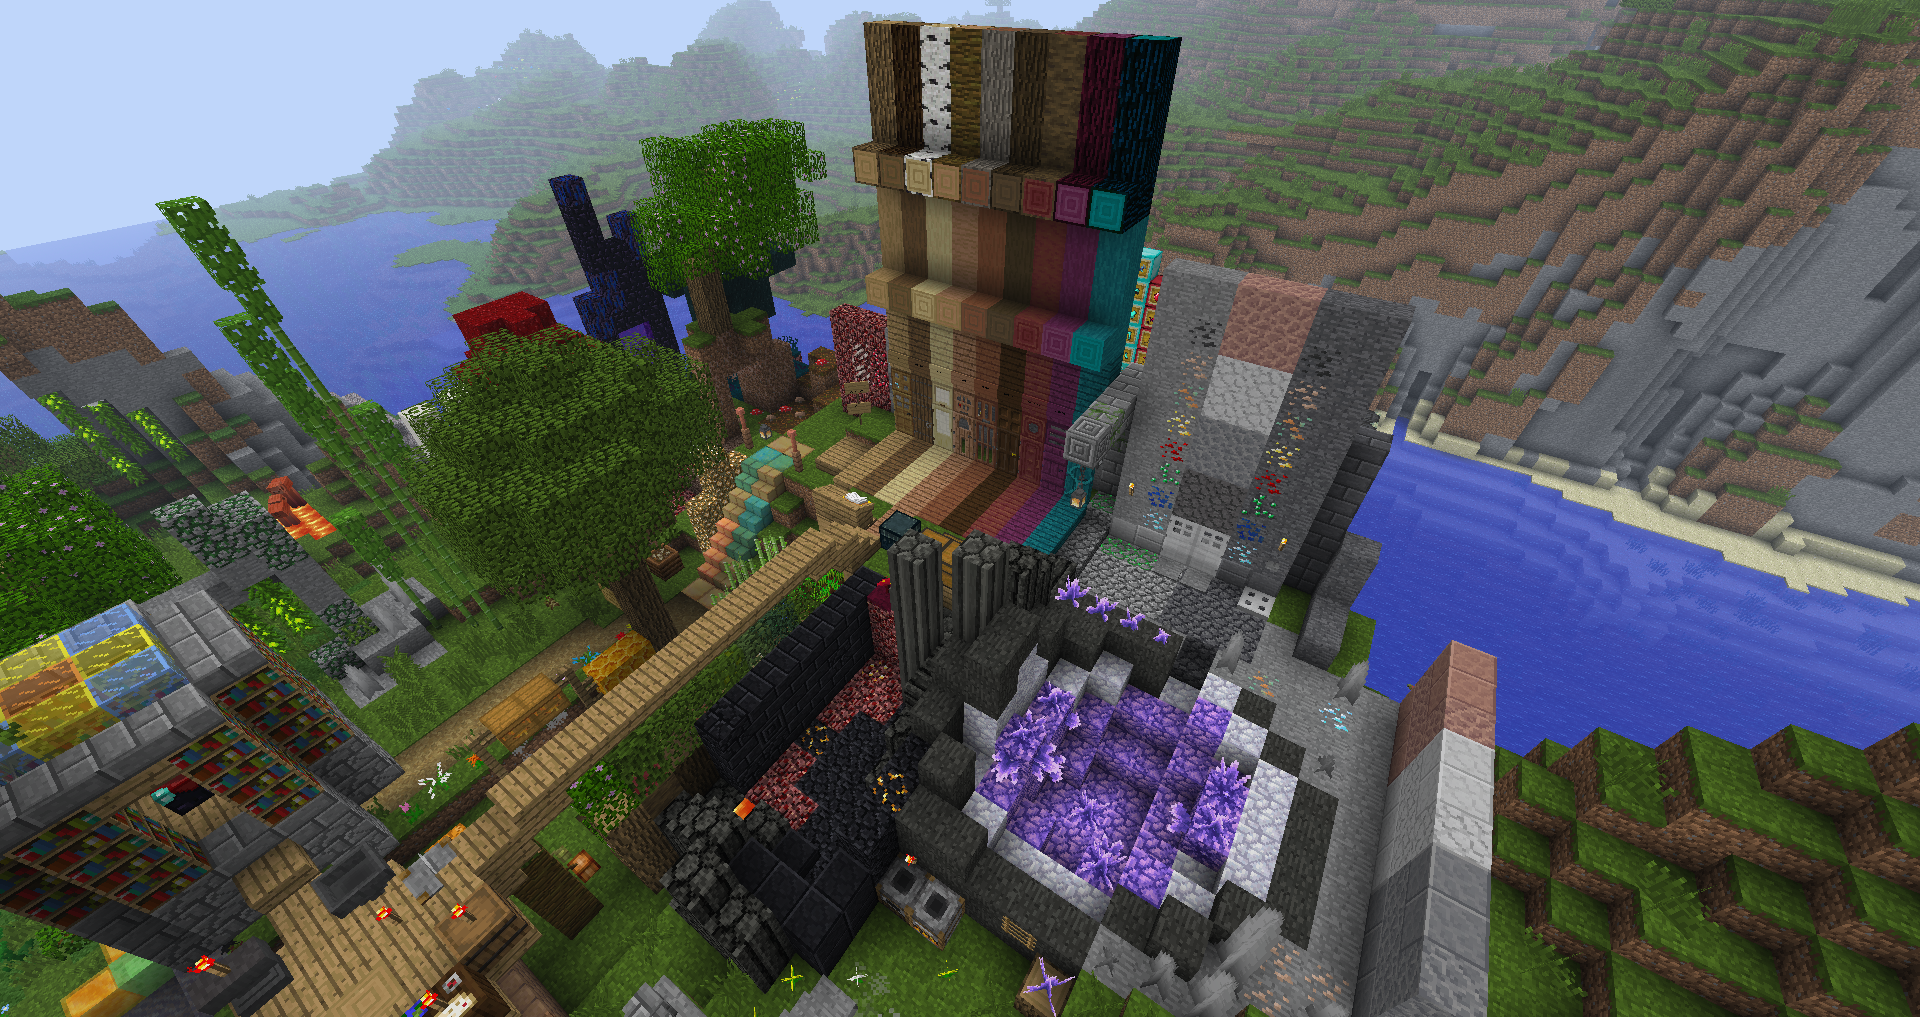 a screenshot of a minecraft world with beta-esque textures